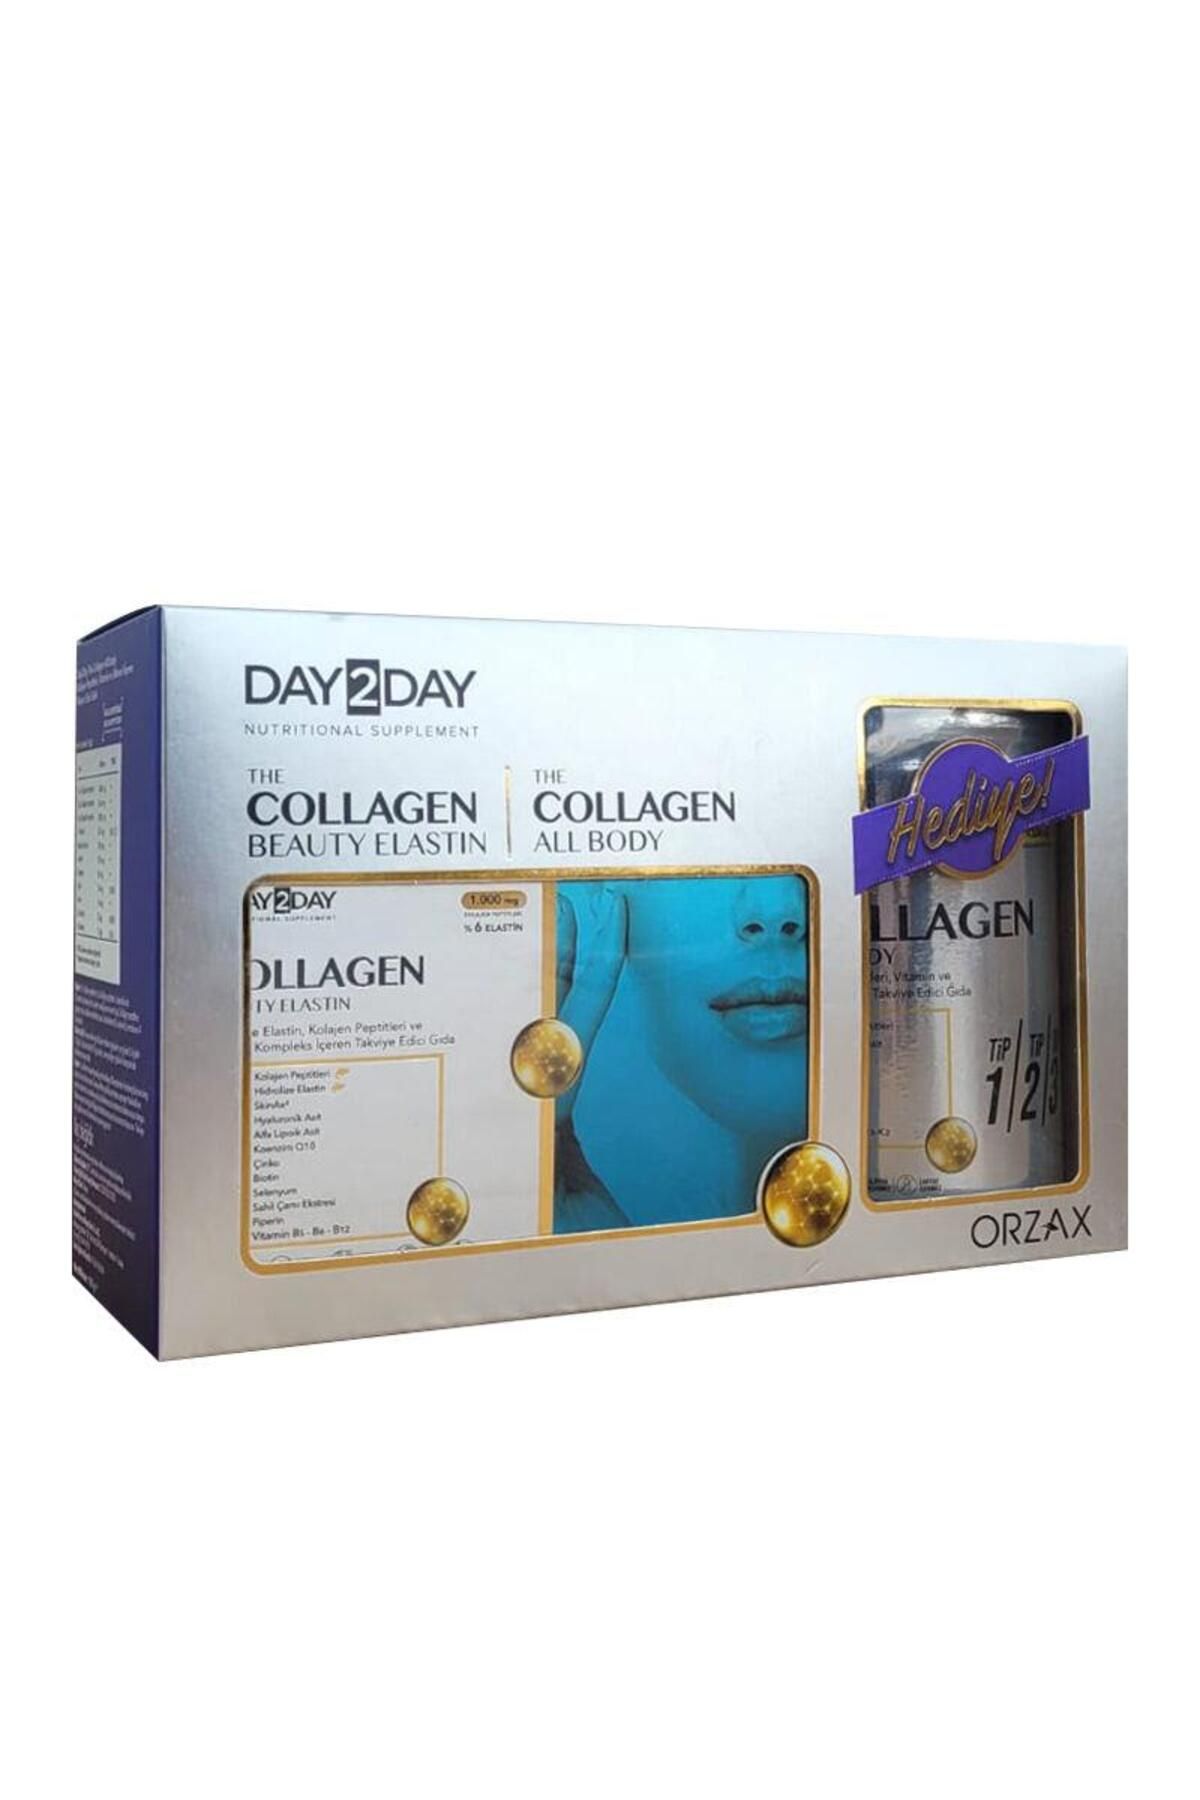 DAY2DAY Collagen Beauty Elastin 30 Tablet + Day2Day Collagen All Body 100 gr Hediye